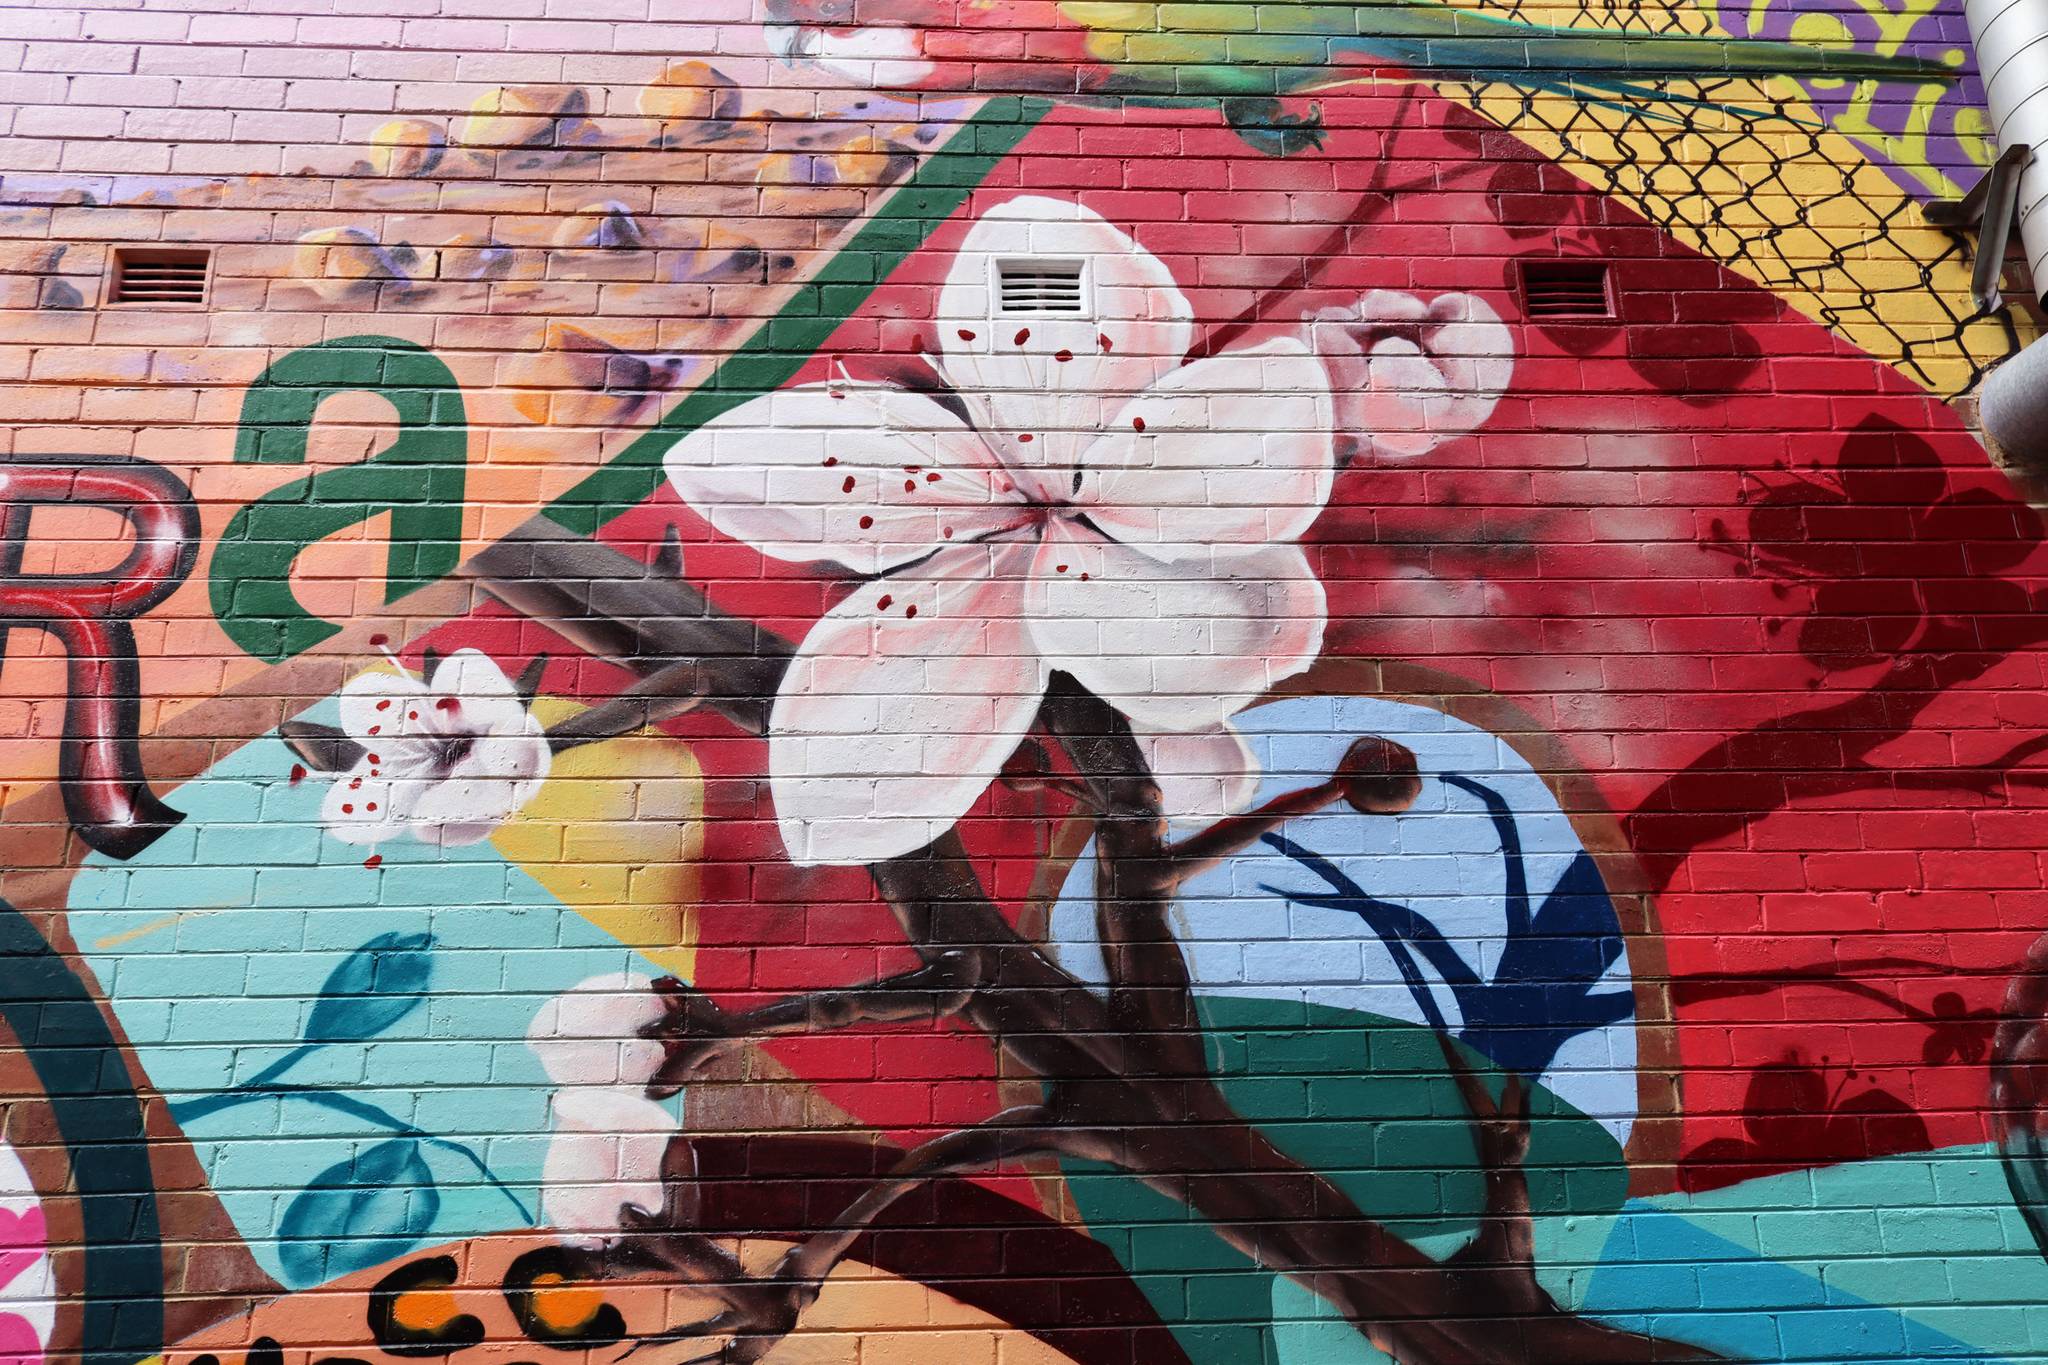 The Brightsiders, The Zookeeper, Drapl&mdash;Cowra Laneway Mural